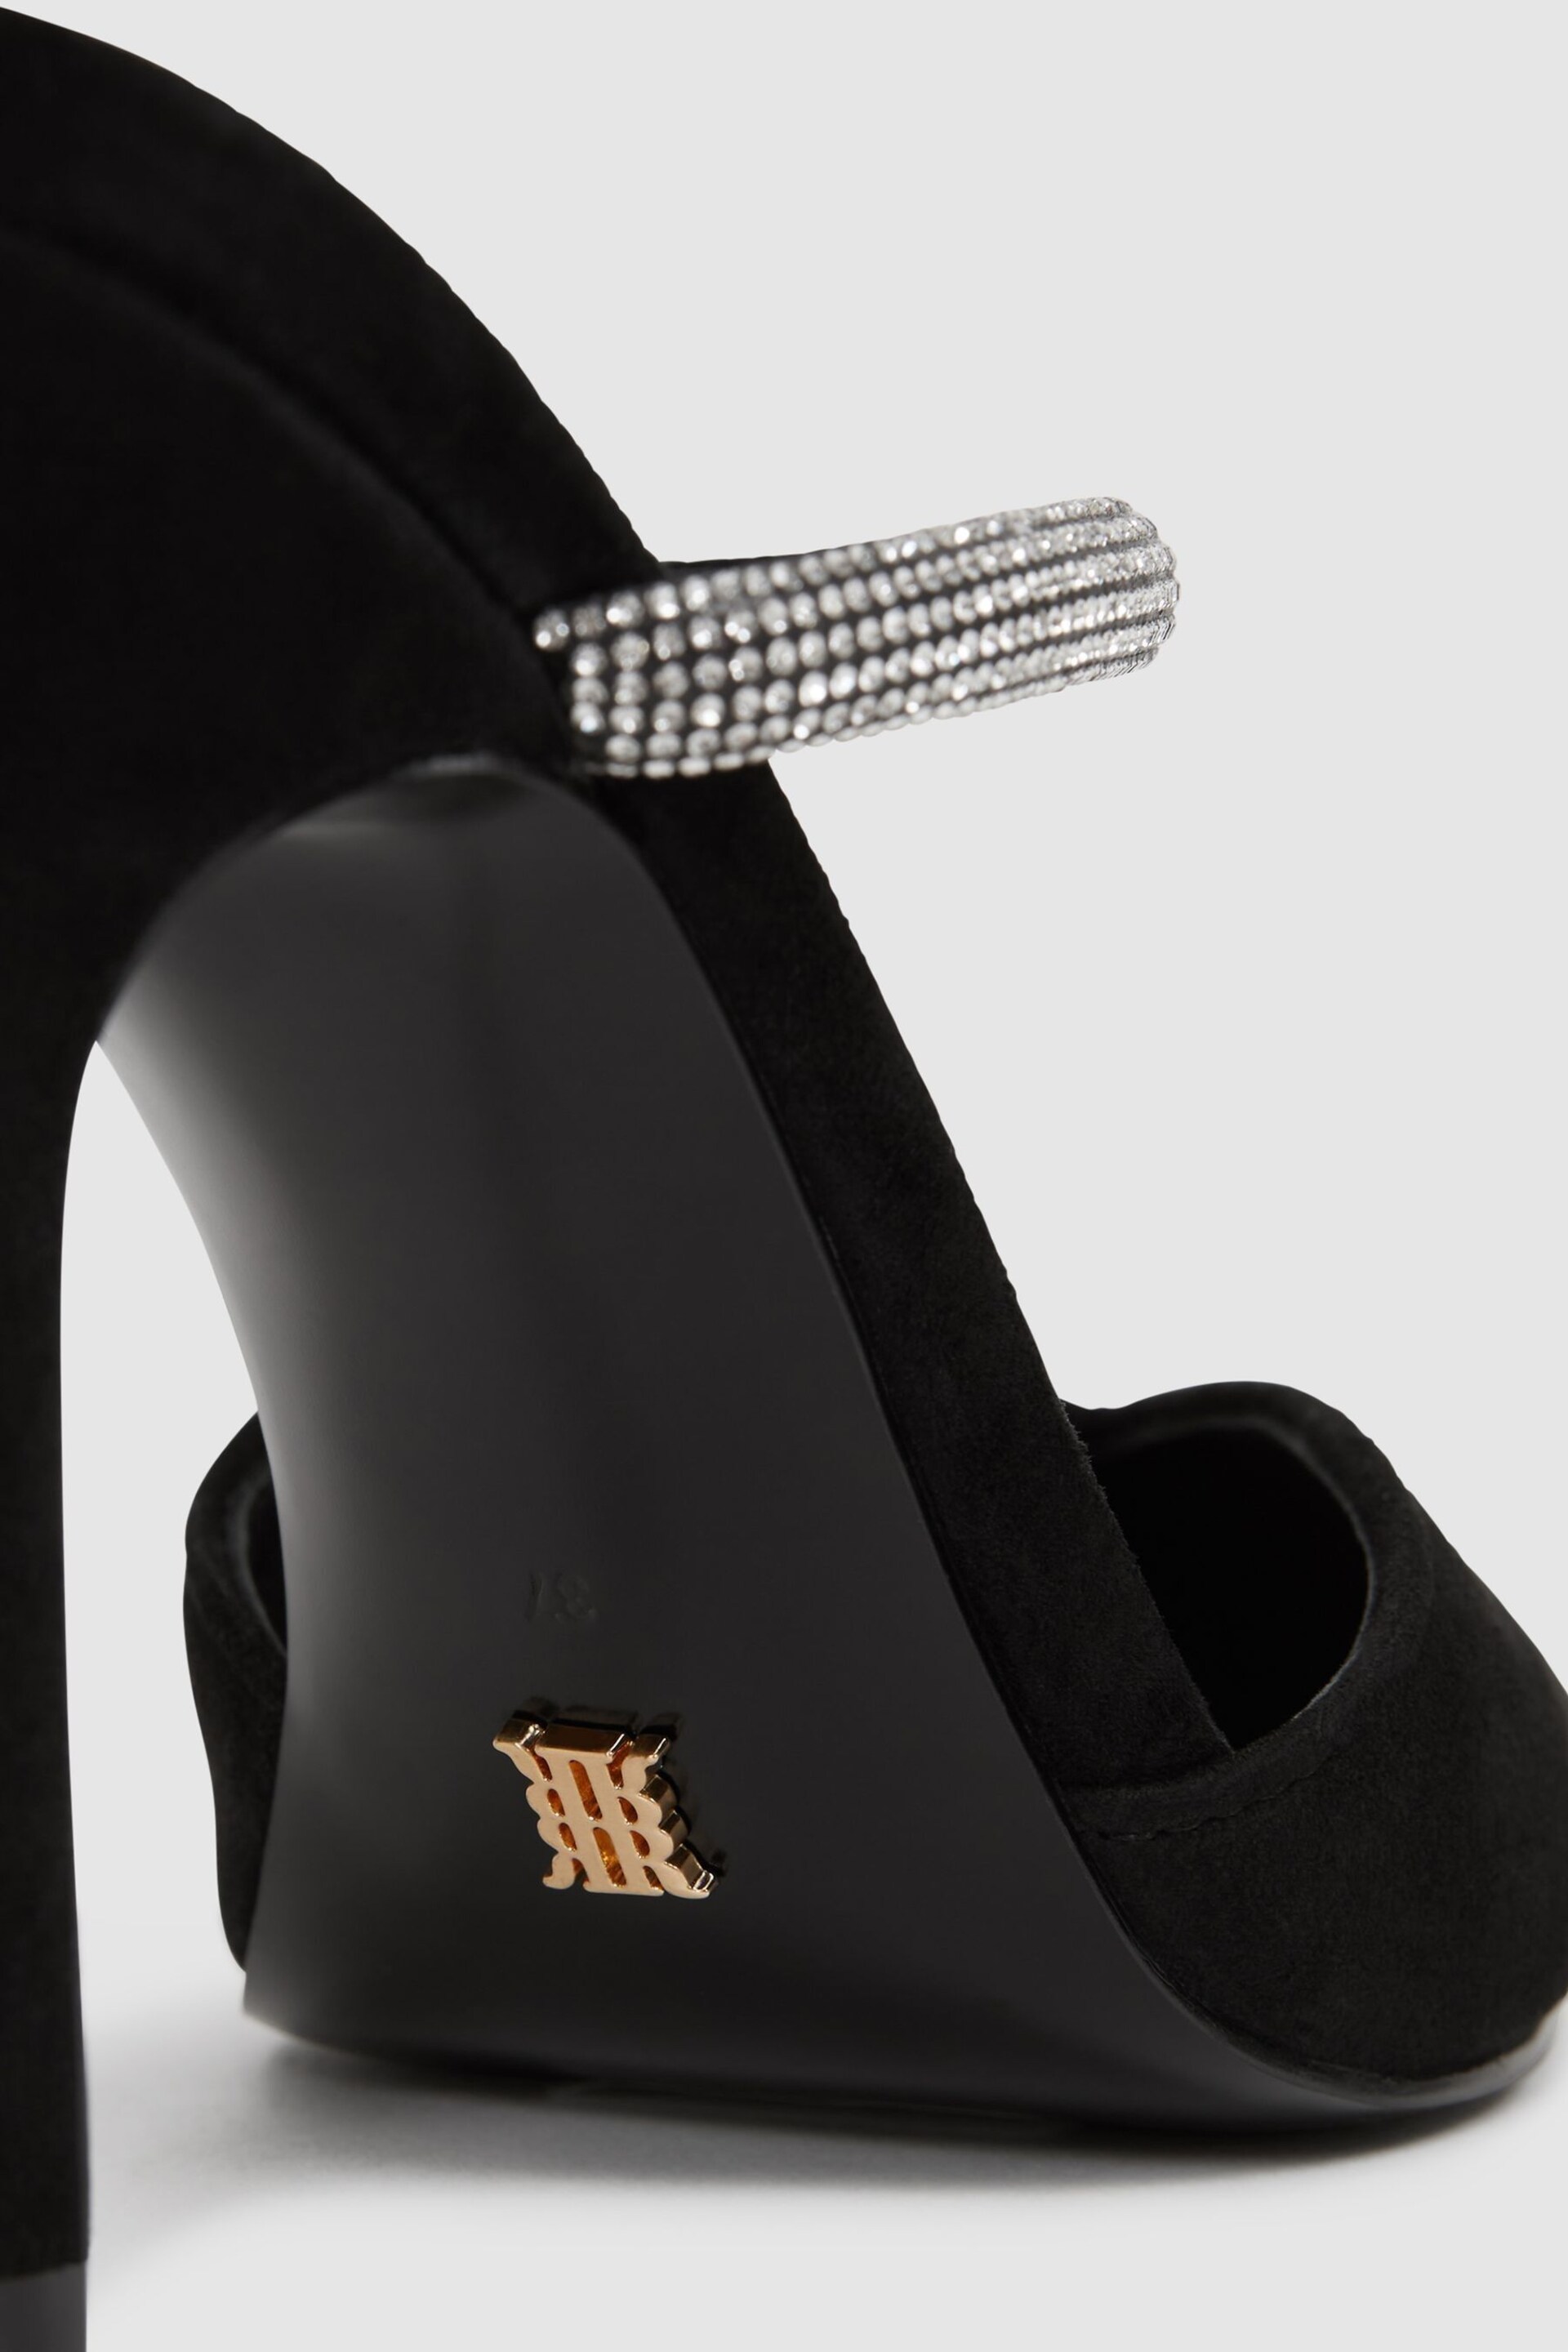 Reiss Black Banbury Embellished Crystal Court Shoes - Image 4 of 6